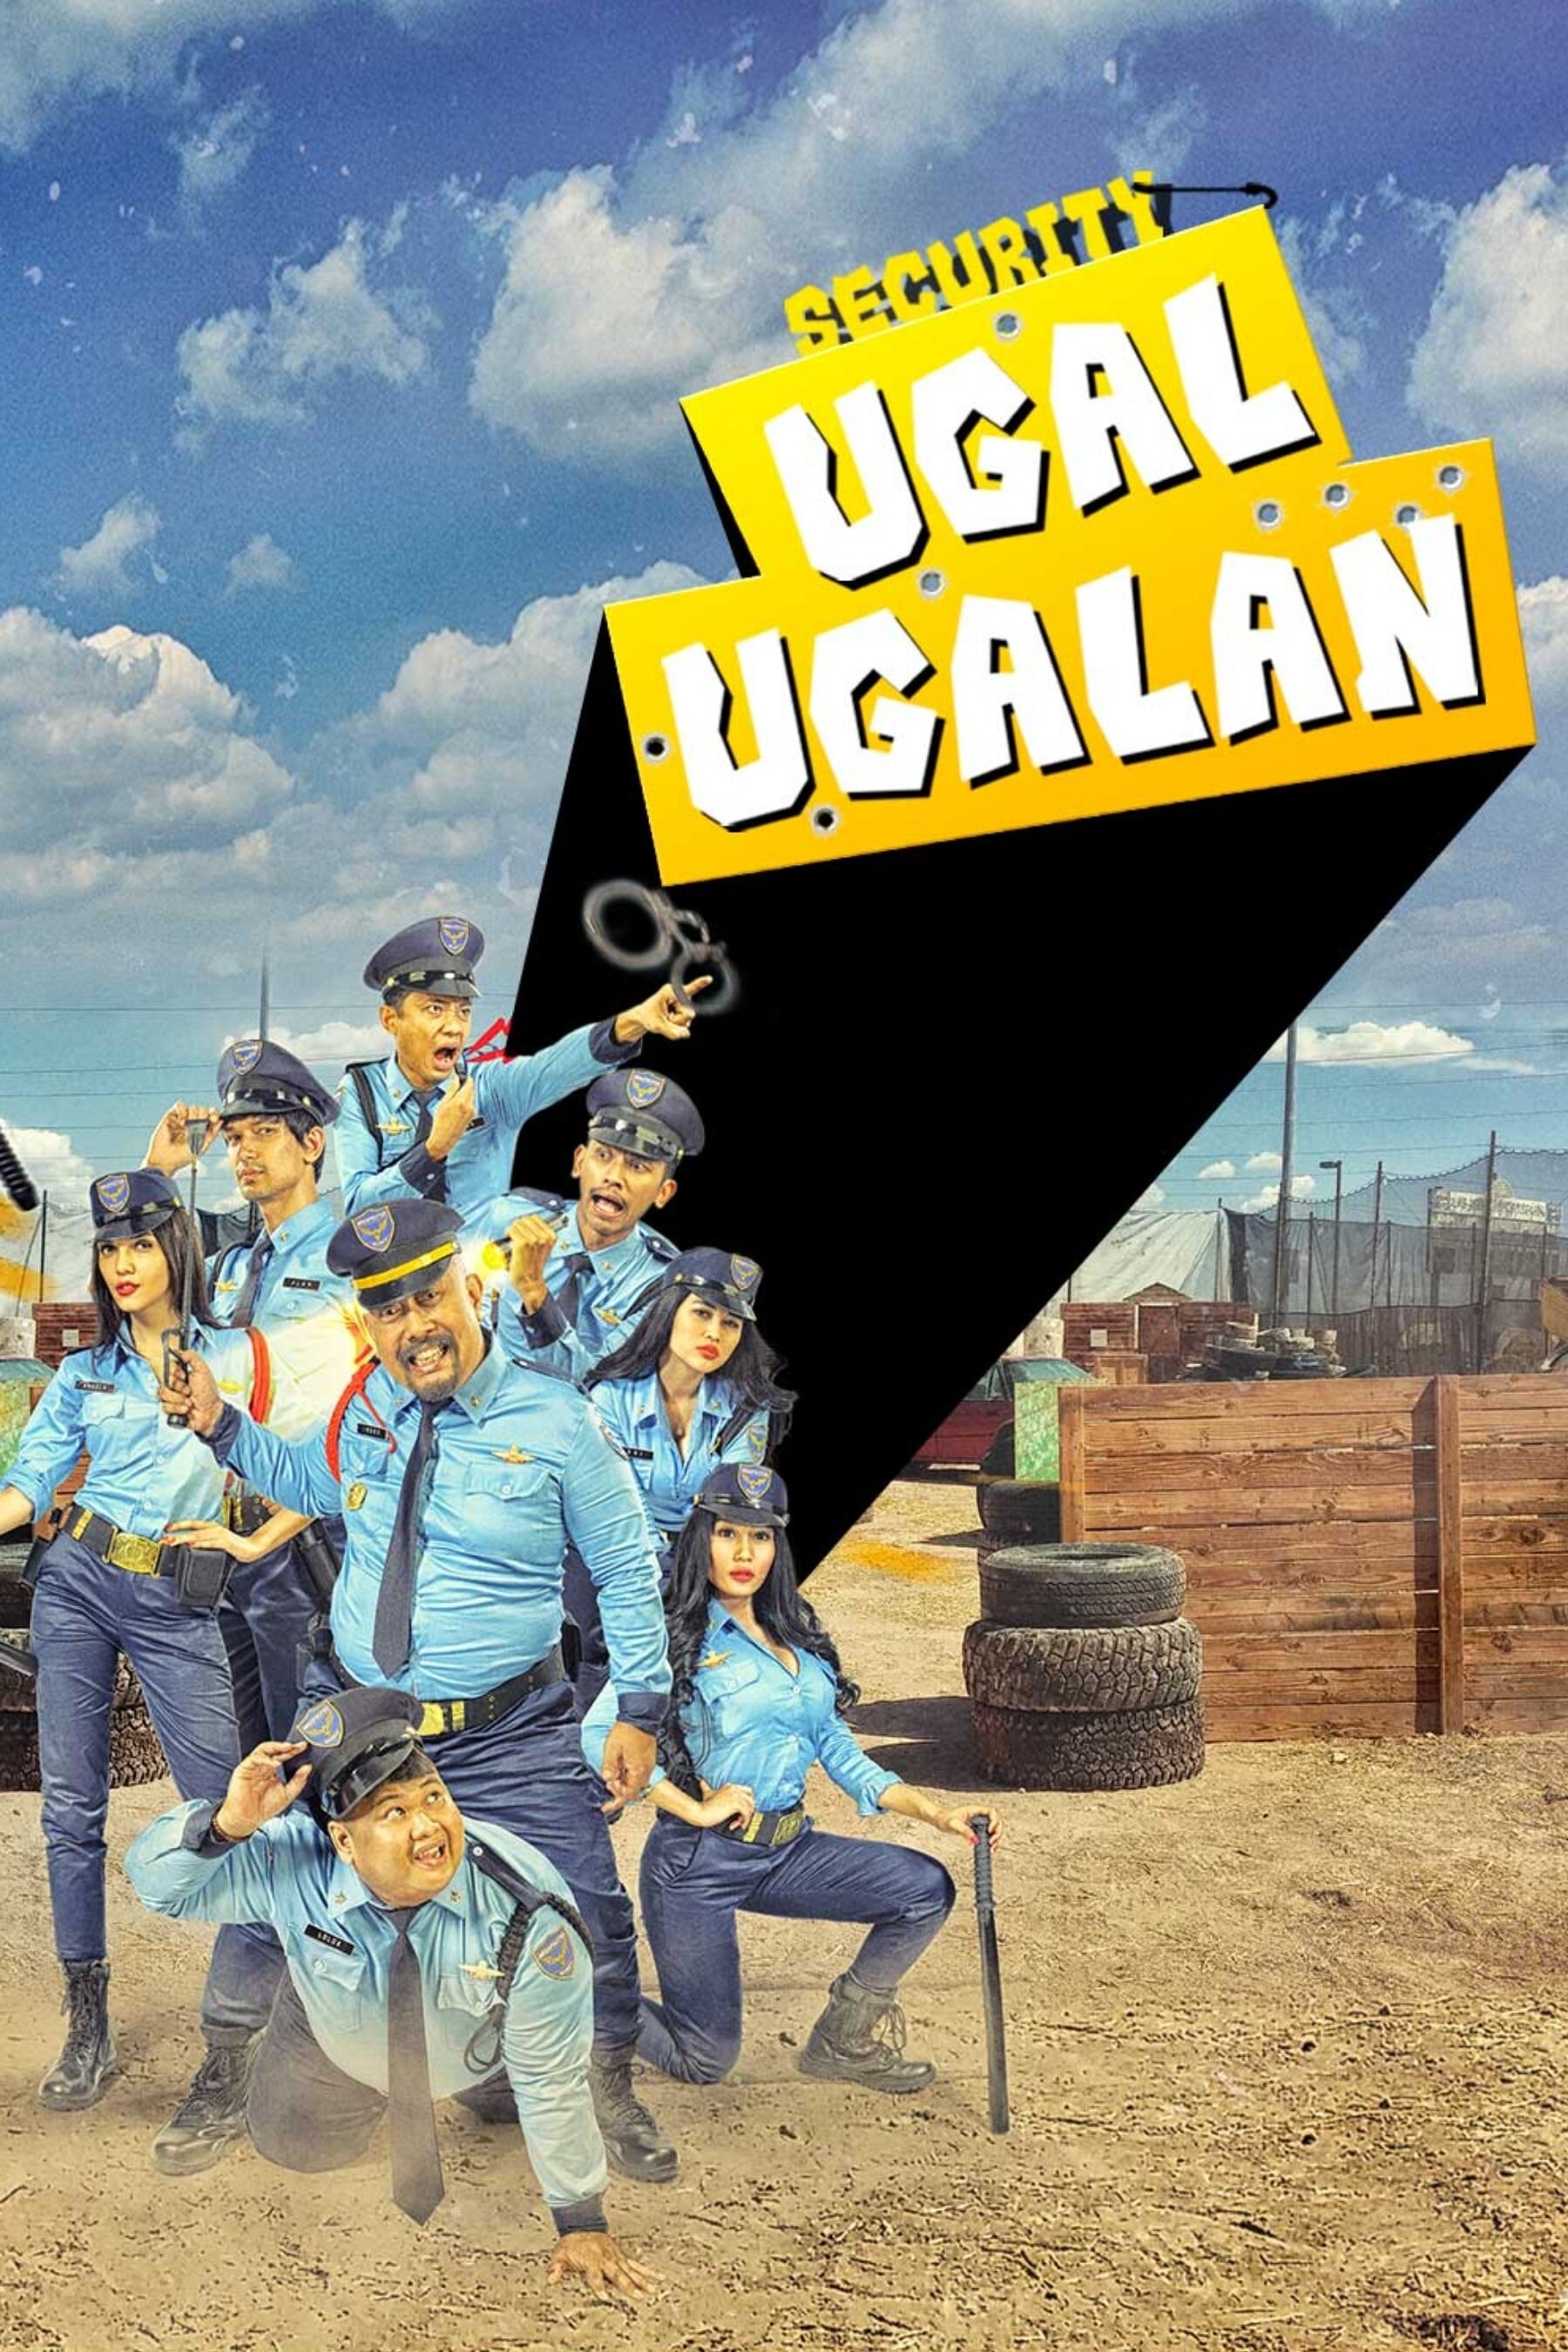 Security Ugal-Ugalan (2017)